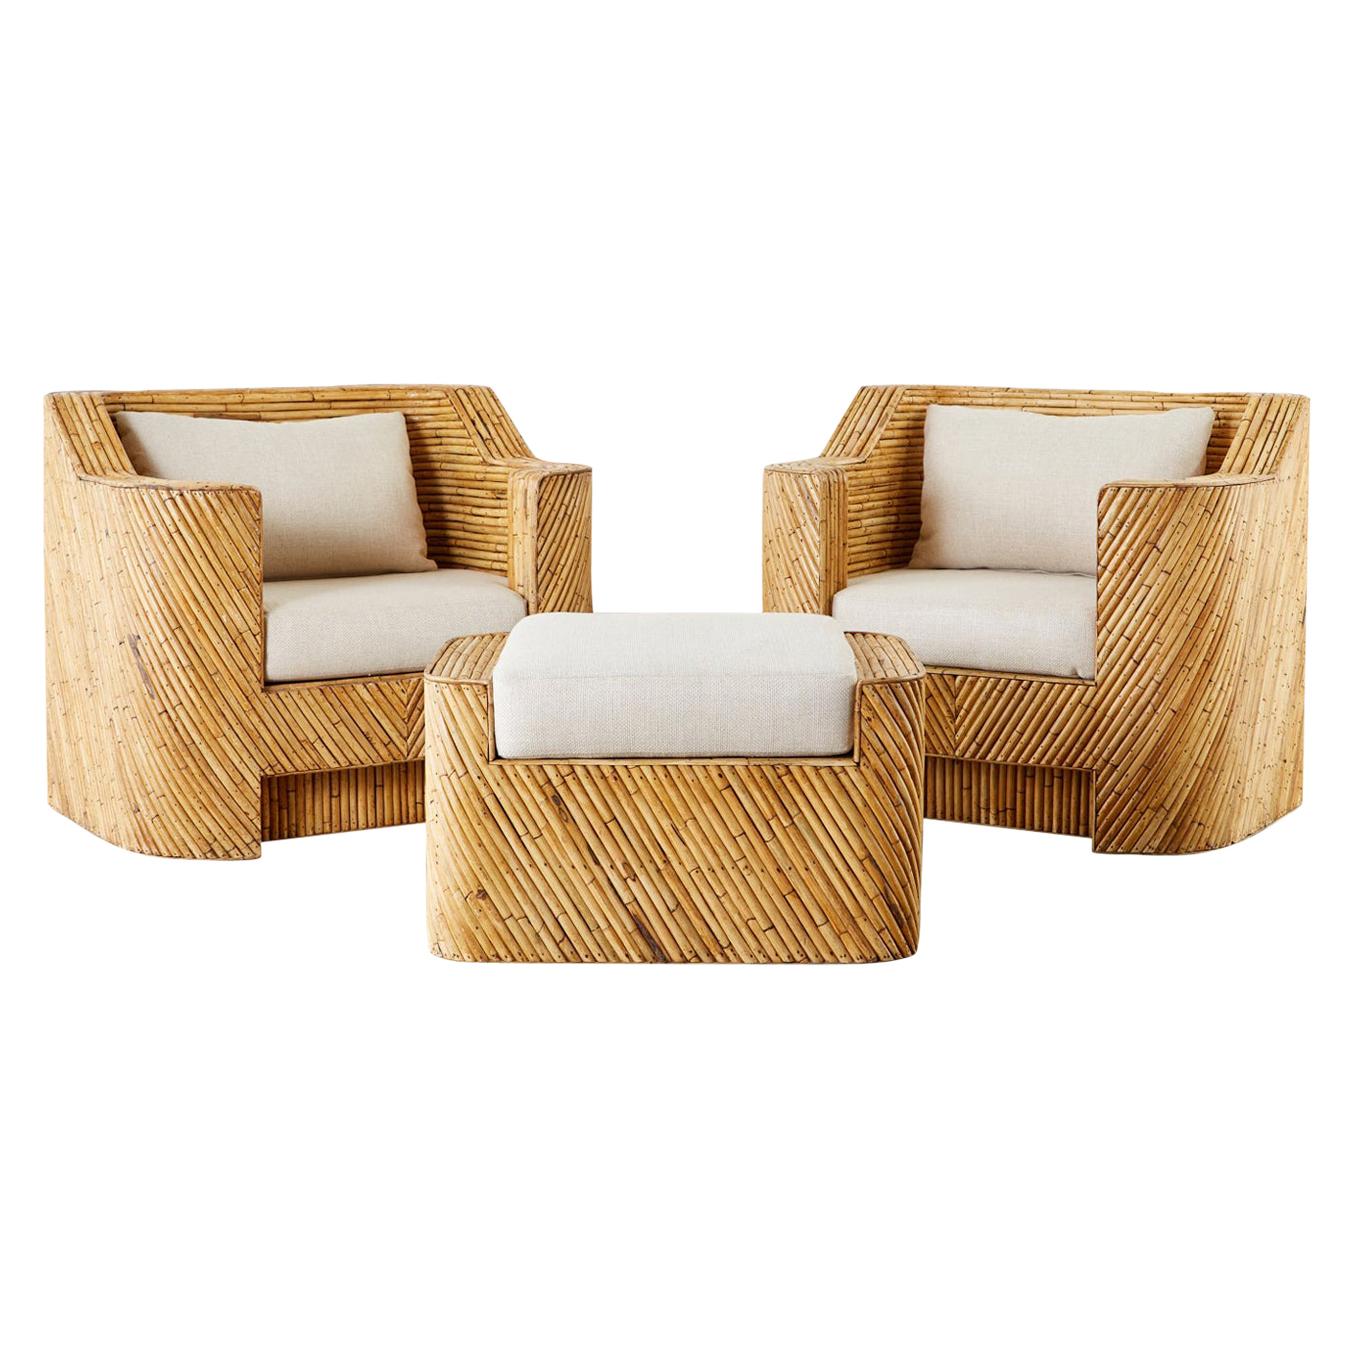 Pair of Organic Modern Bamboo Rattan Lounge Chairs and Ottoman